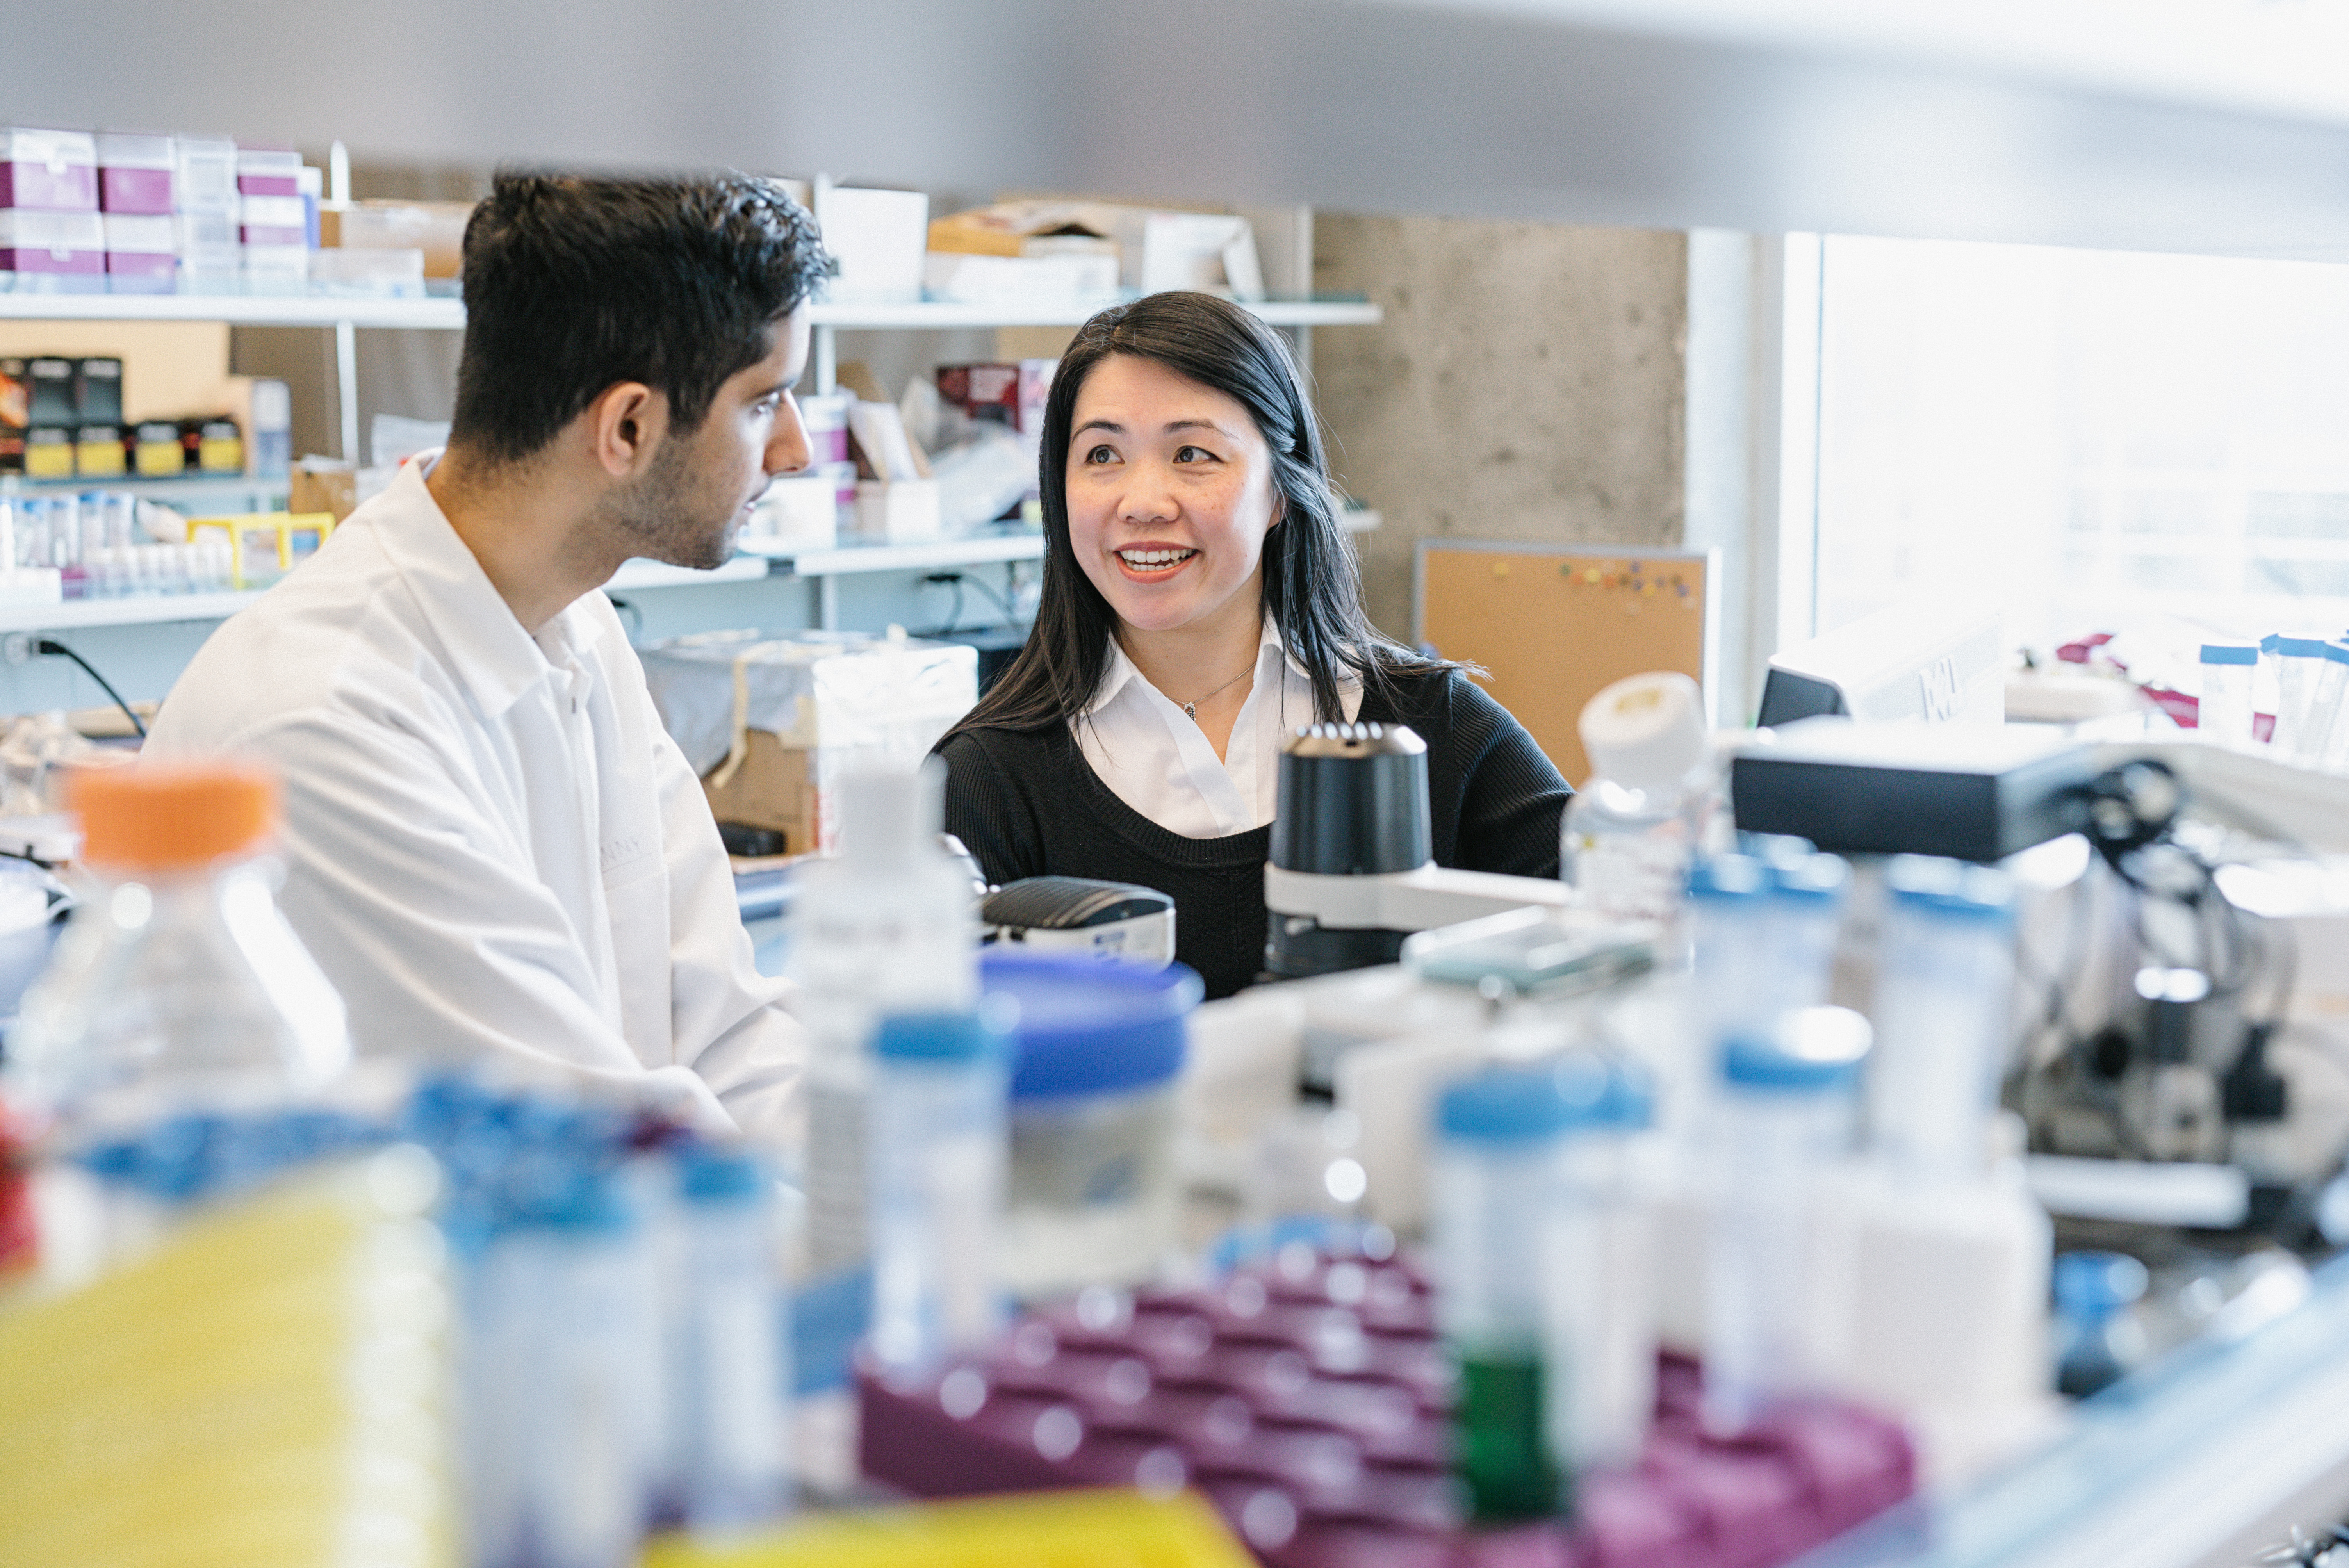 Why choose Biomedical Engineering at UBC?